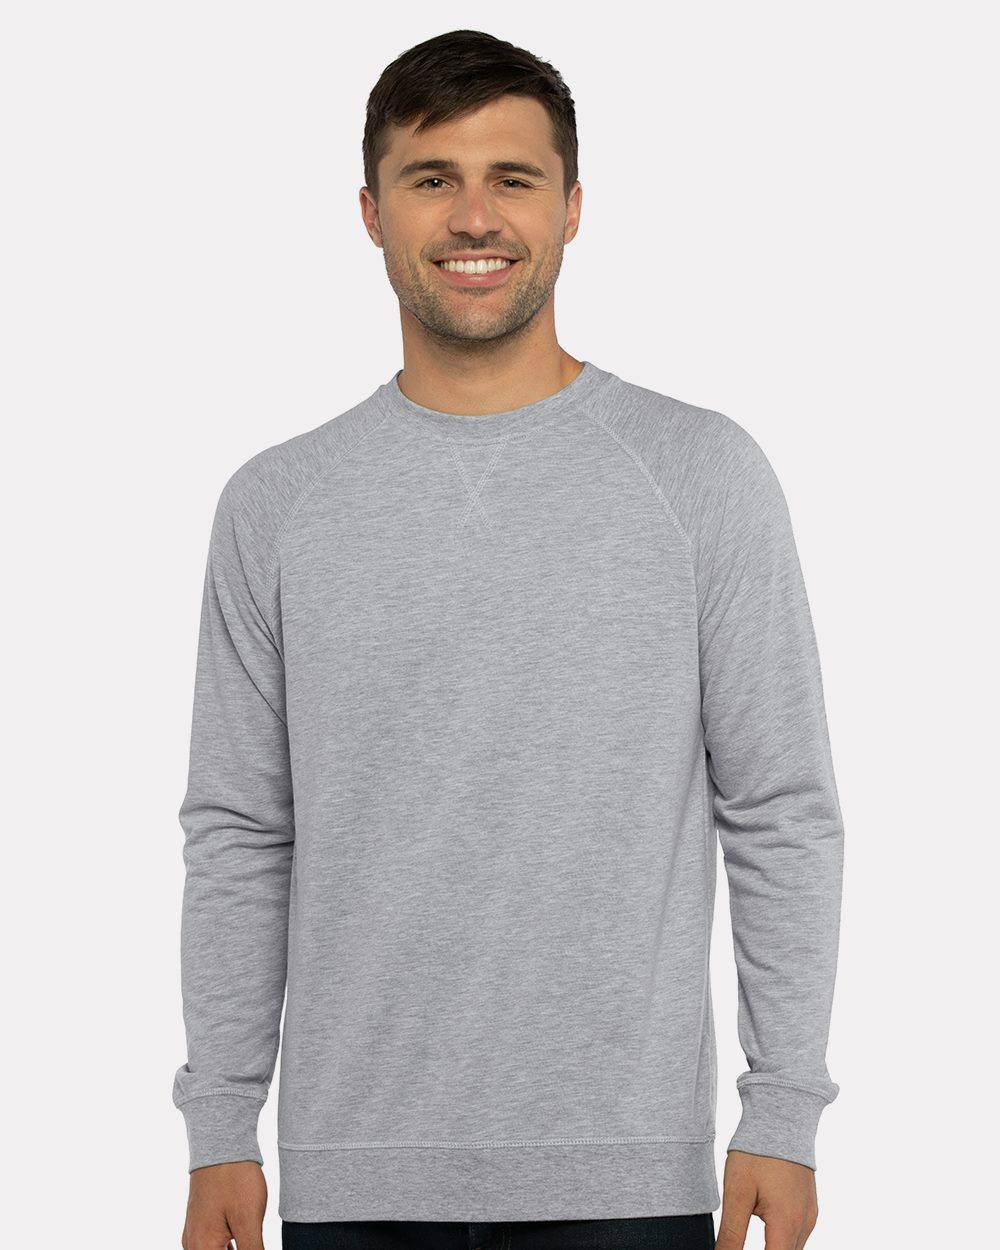 Laguna Raglan Crewneck Sweatshirt - Next Level 9000 | Clothing